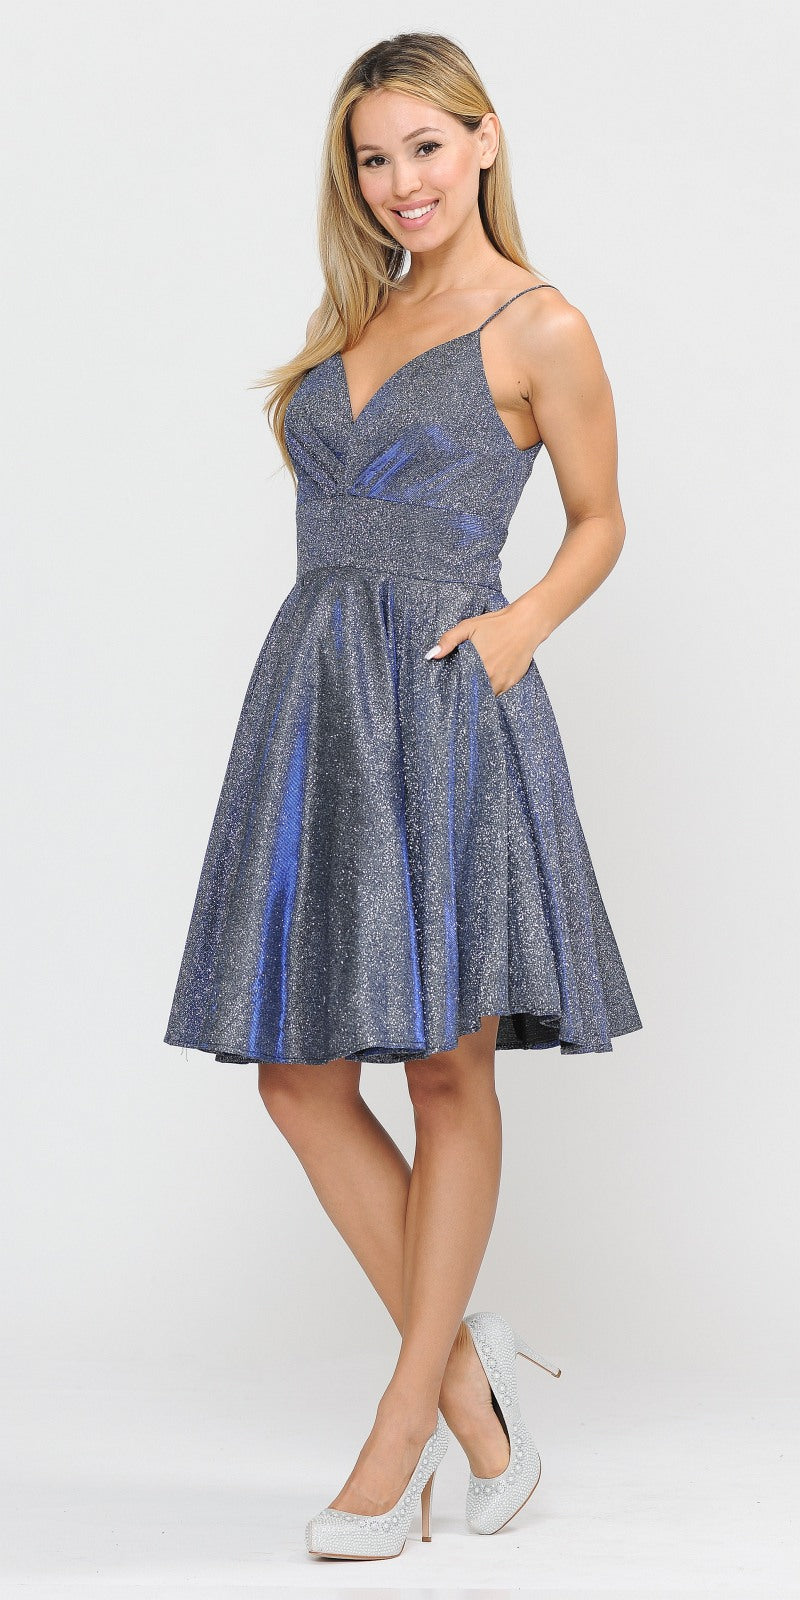 Poly USA 8530 Royal Blue V-Neck Homecoming Short Dress with Pockets 